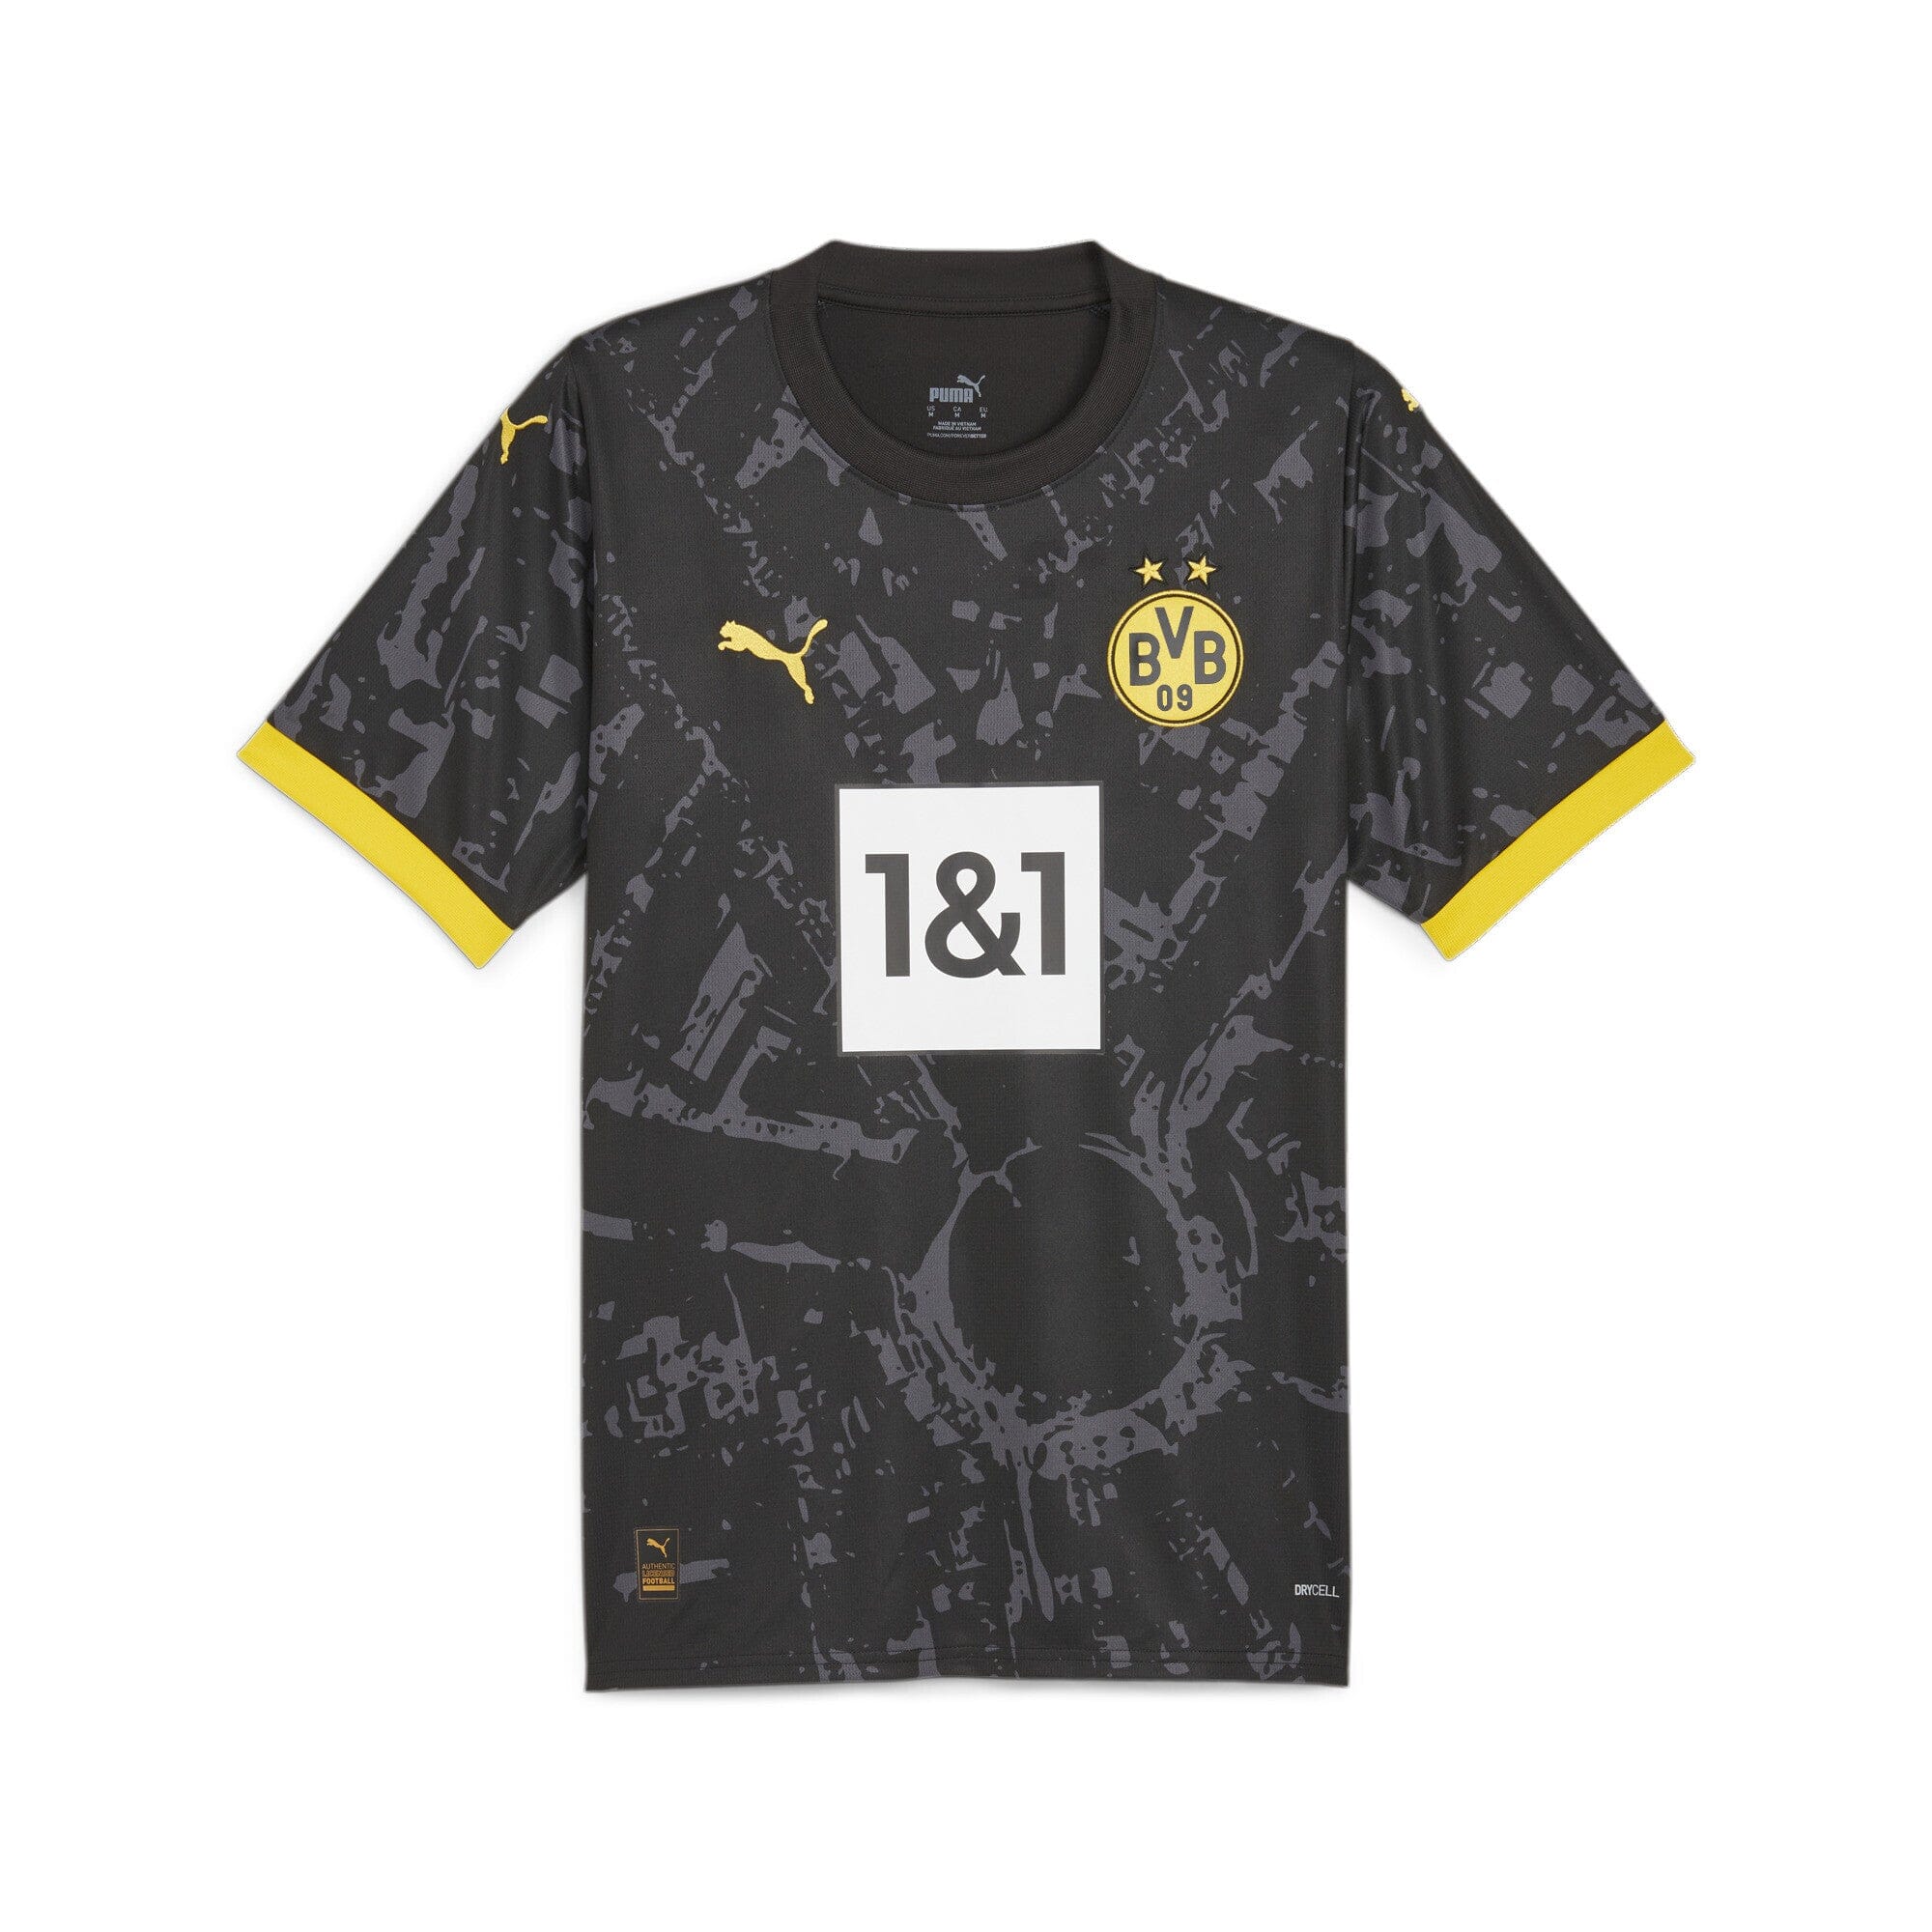 Borussia Dortmund Authentic Soccer Jerseys & Apparel